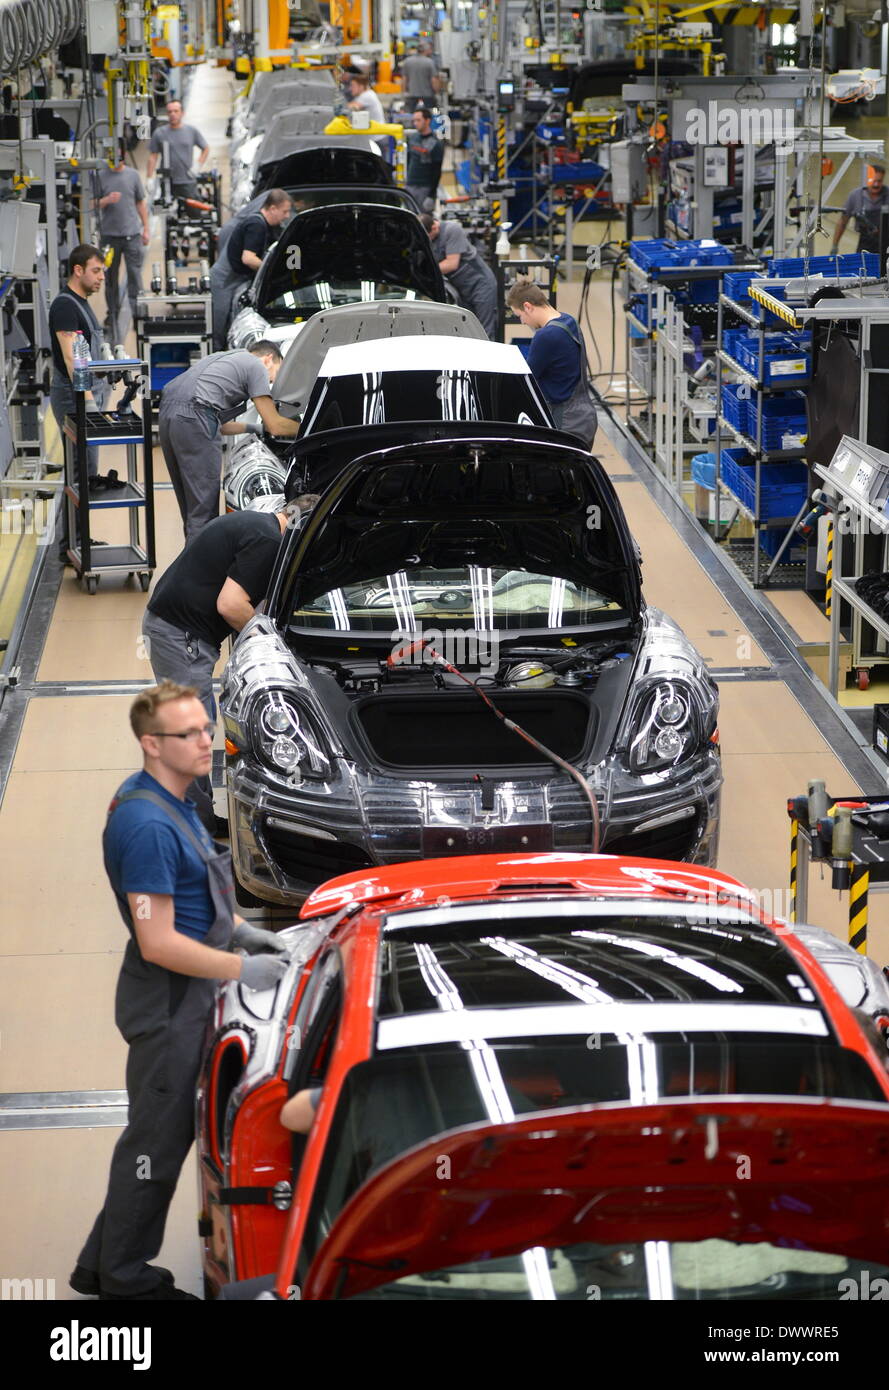 Stuttgart-Zuffenhausen, Germany. 11th Mar, 2014. Porsche employees work on Porsche 911's at the Porsche plant in Stuttgart-Zuffenhausen, Germany, 11 March 2014. The sports car manufacturer will discuss its results for 2013 on 14 March 2014. Photo: BERND WEISSBROD/dpa/Alamy Live News Stock Photo